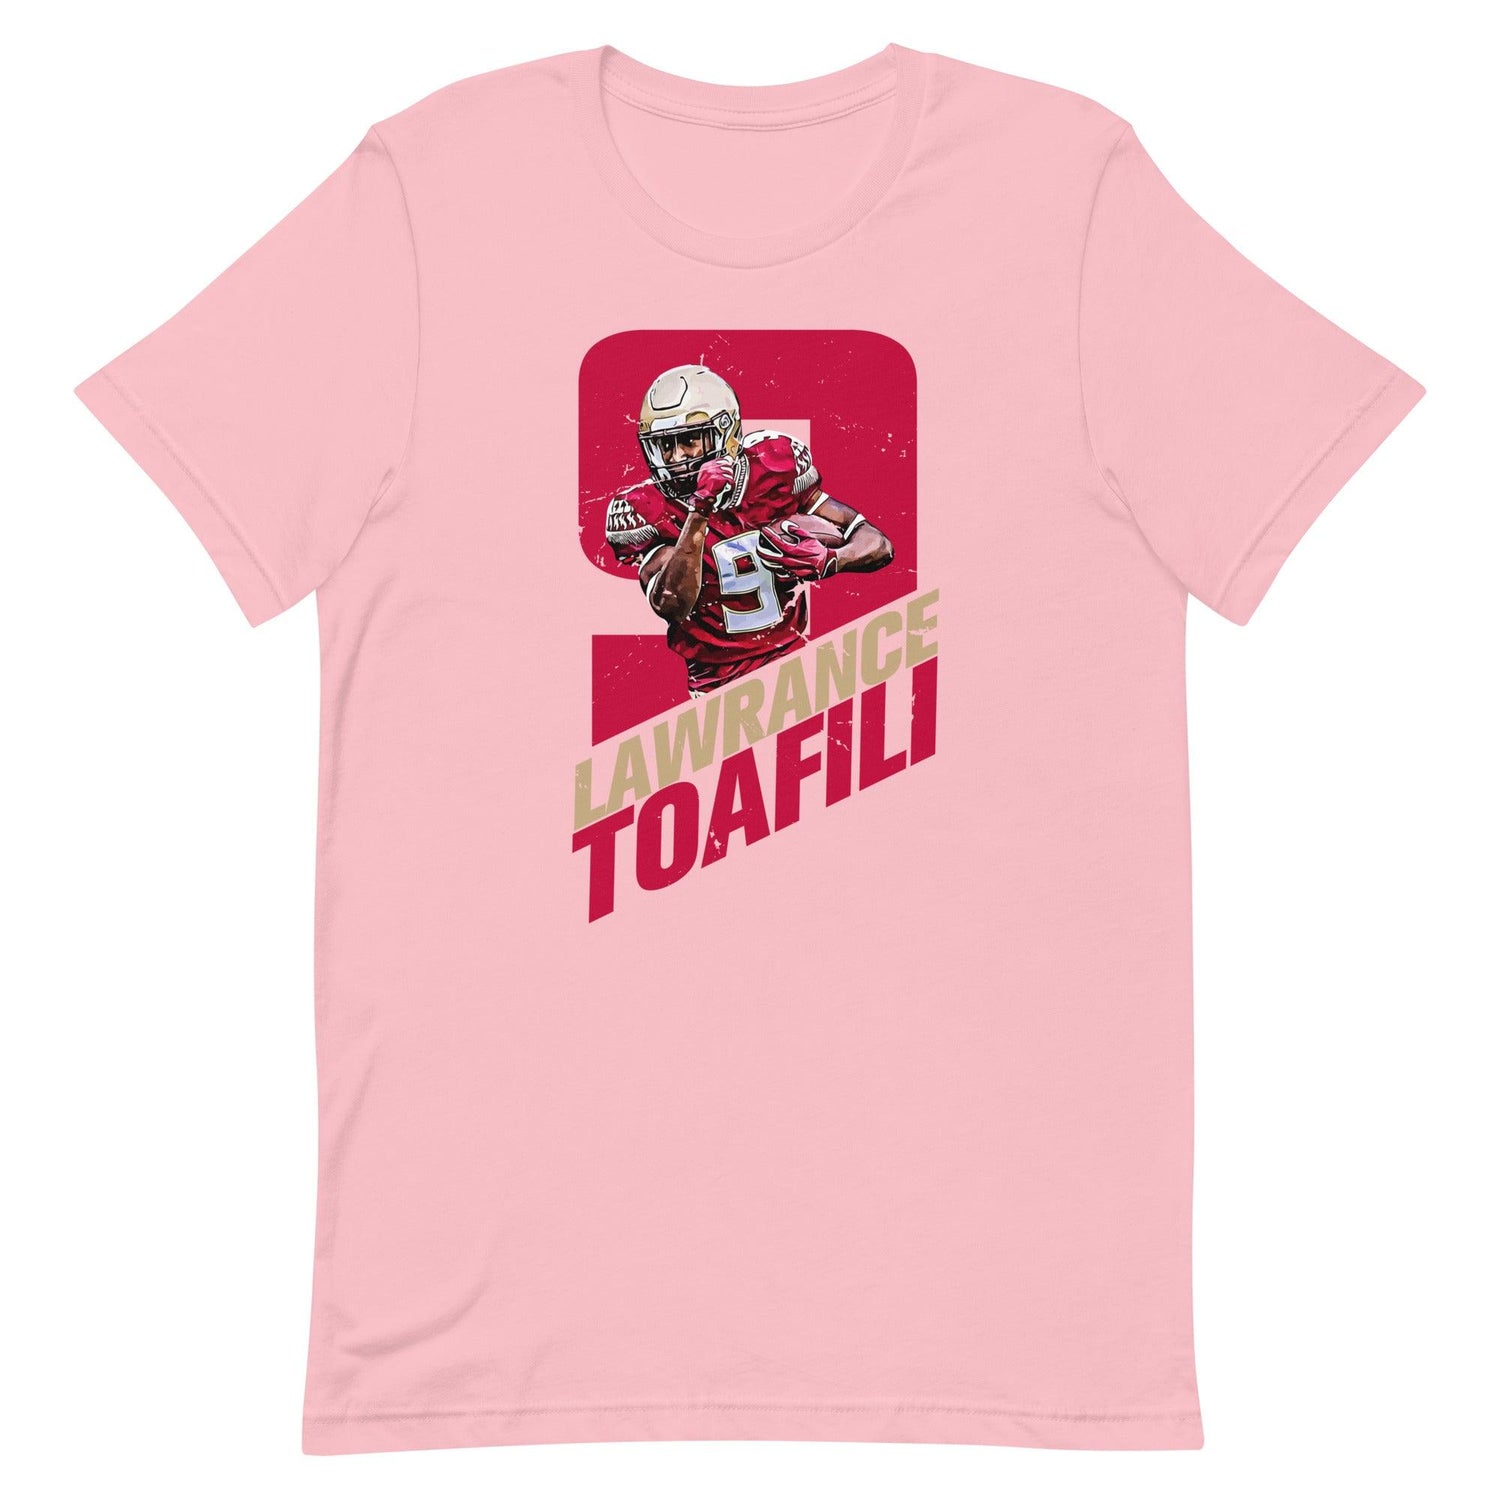 Lawrance Toafili "Run It" t-shirt - Fan Arch